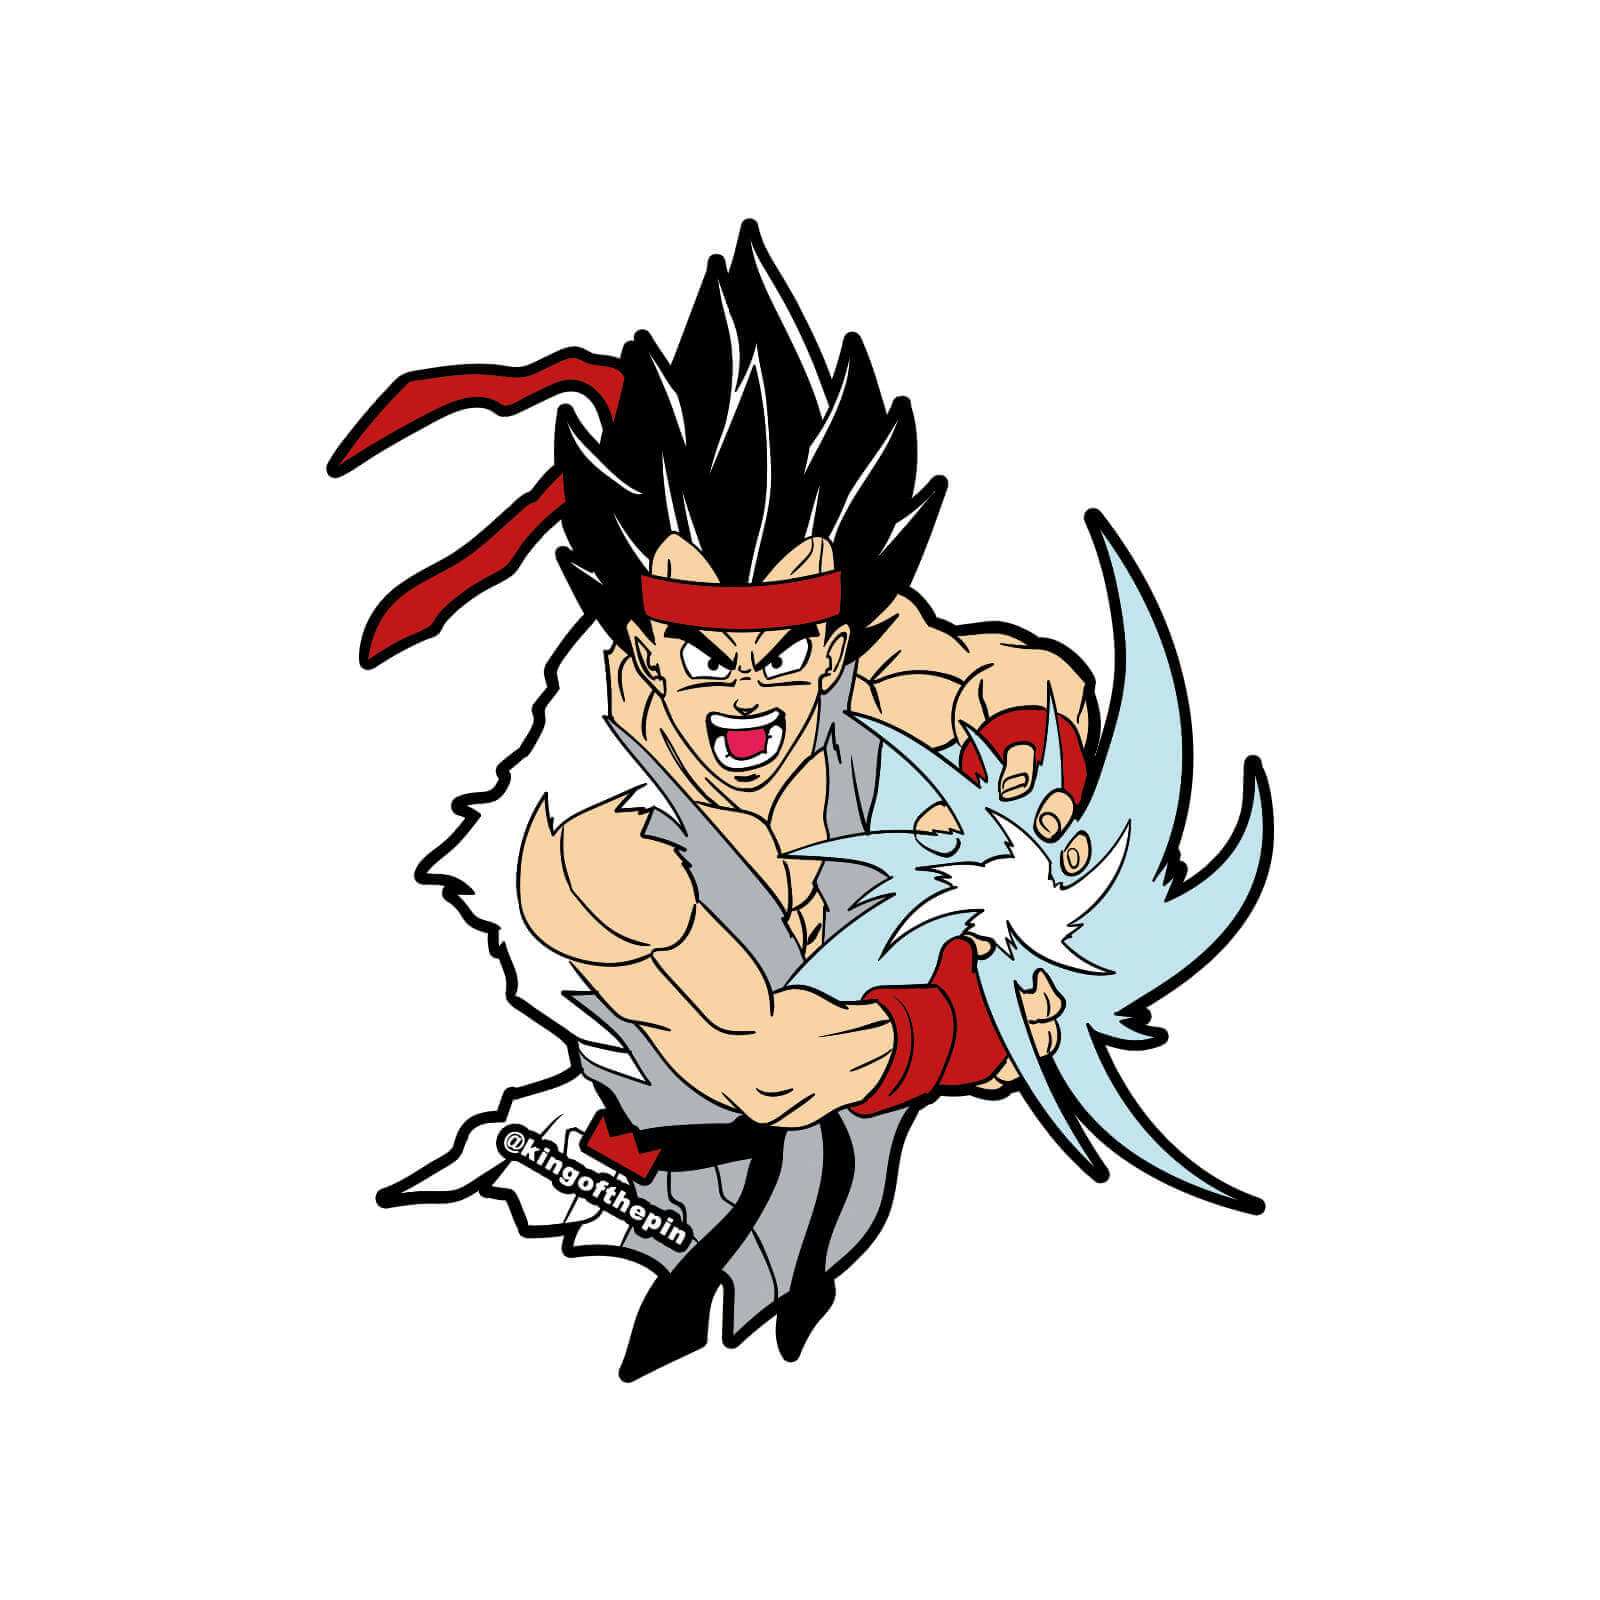 Rygeta (Street Fighter x Dragon Ball Z Mashup) Sticker – King of the Pin